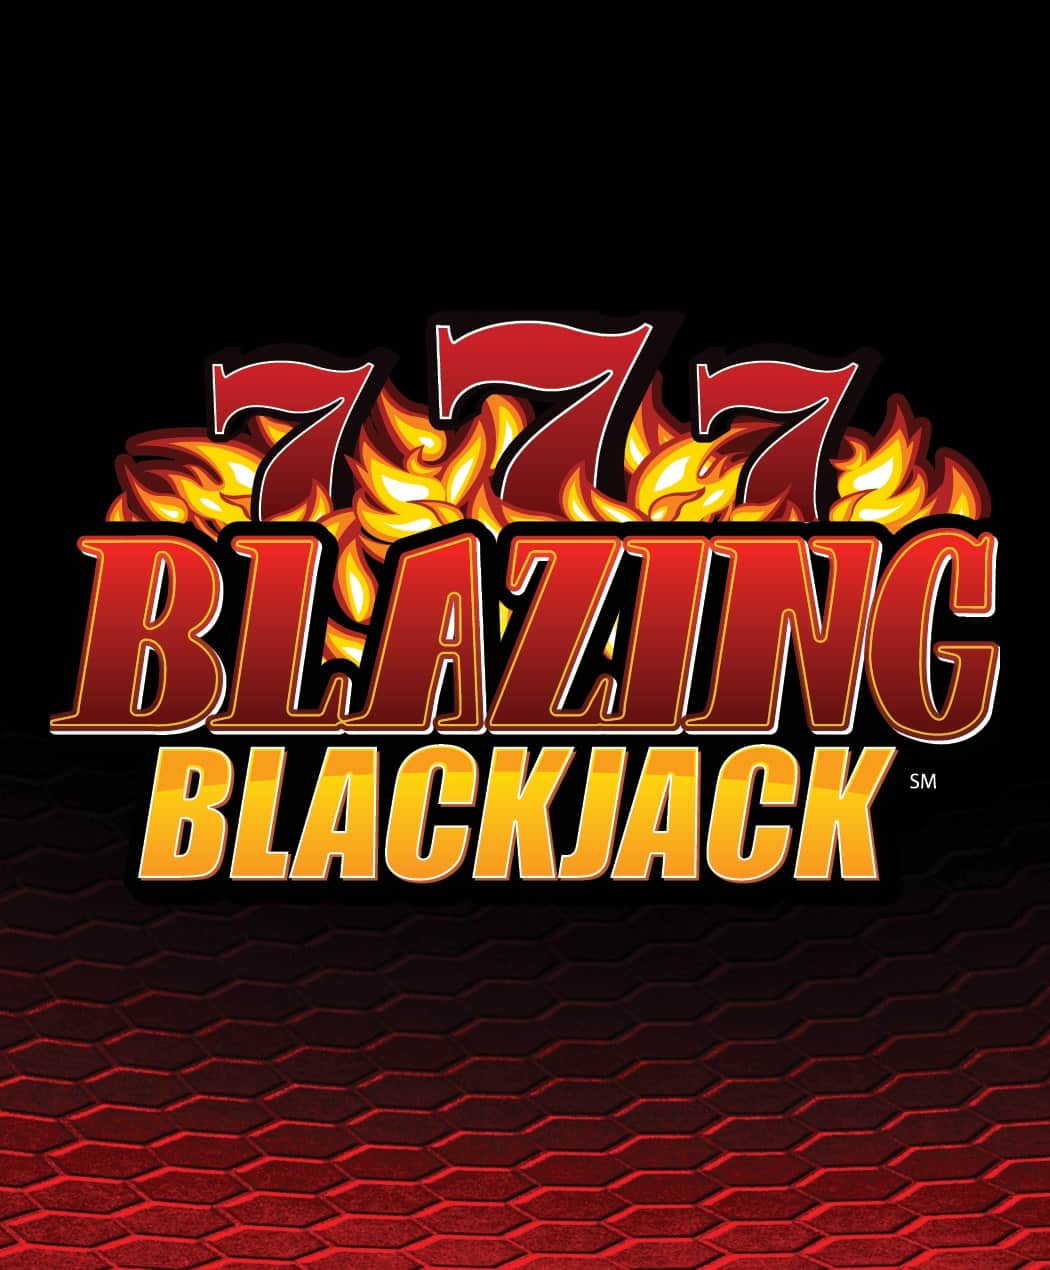 Blazing 7s Blackjack at Point Place Casino